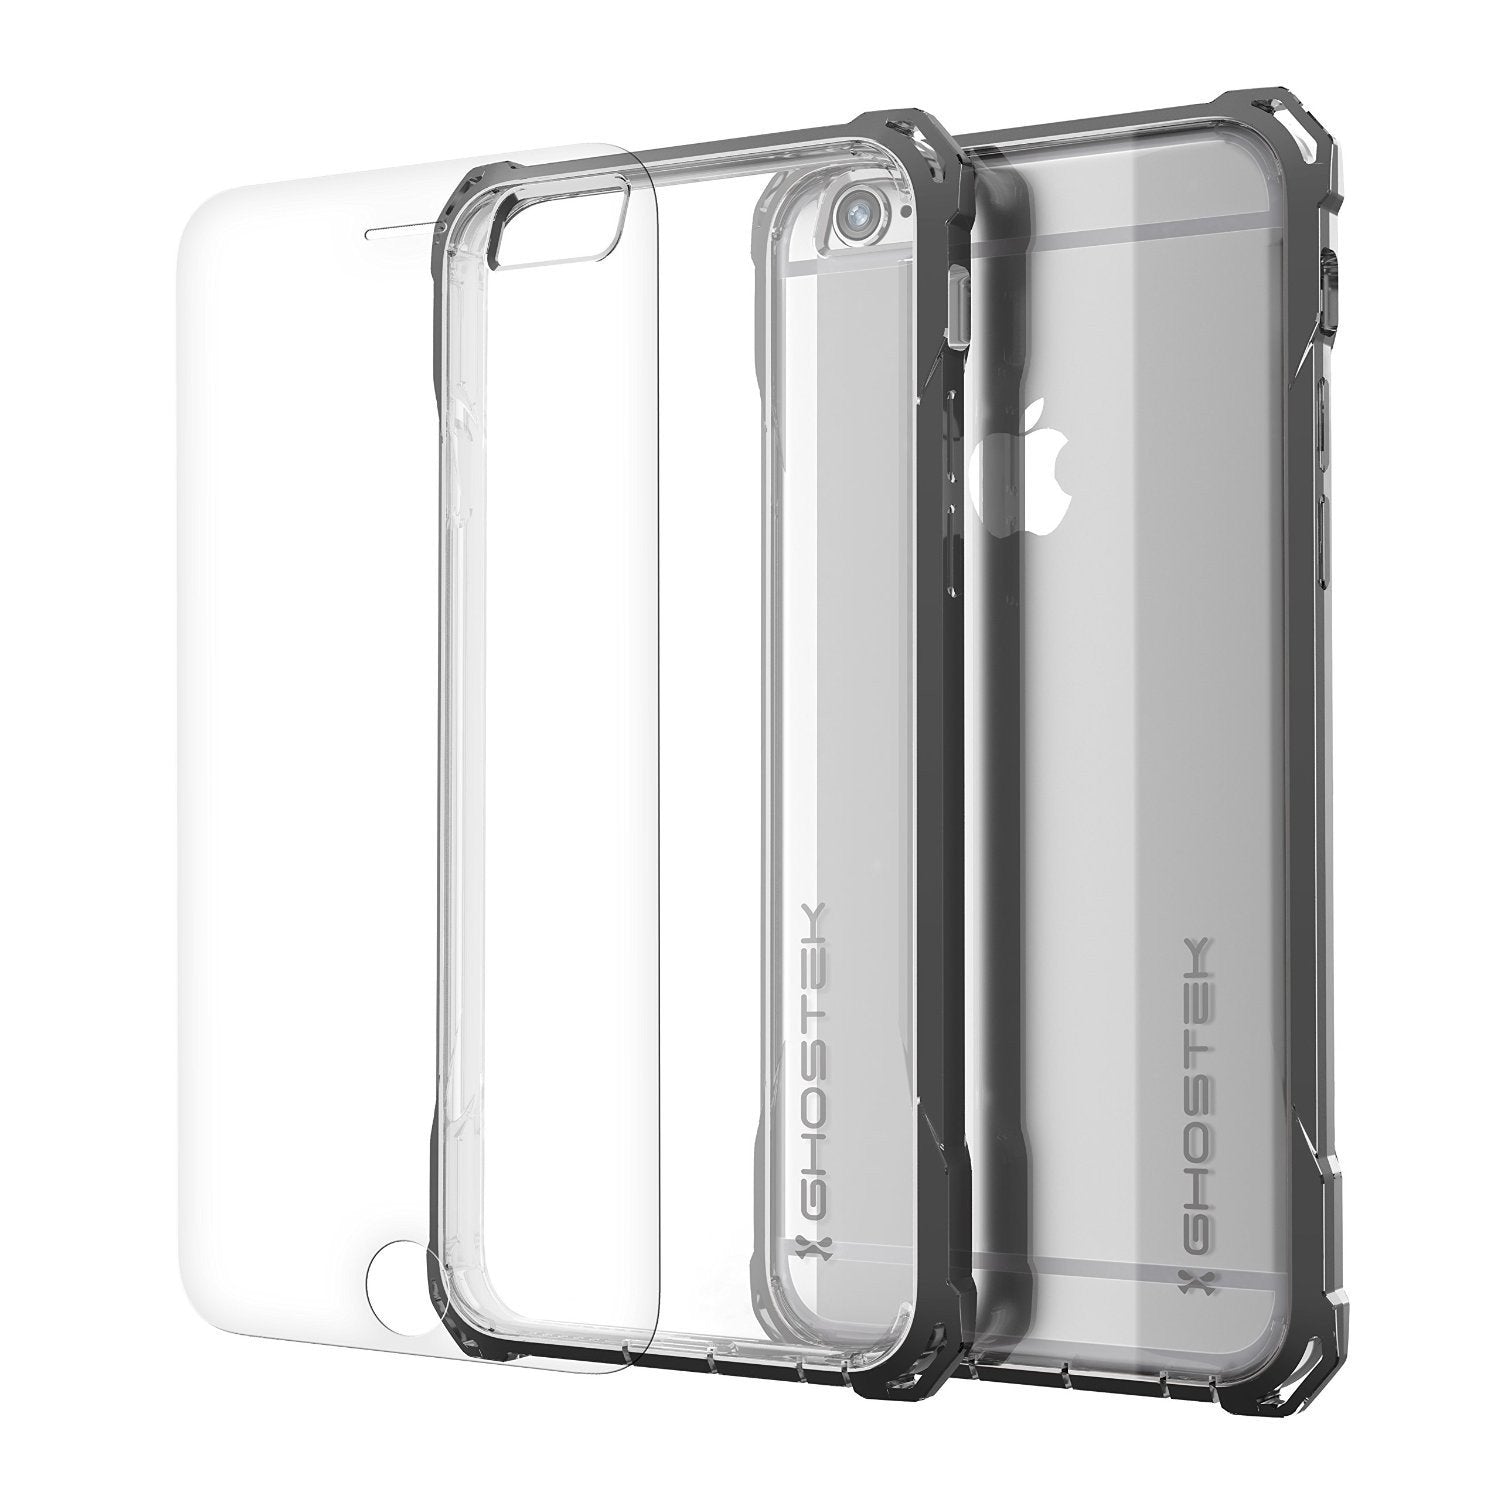 iPhone 6S Case, Ghostek® Covert Space Grey, Premium Impact Armor | Lifetime Warranty Exchange